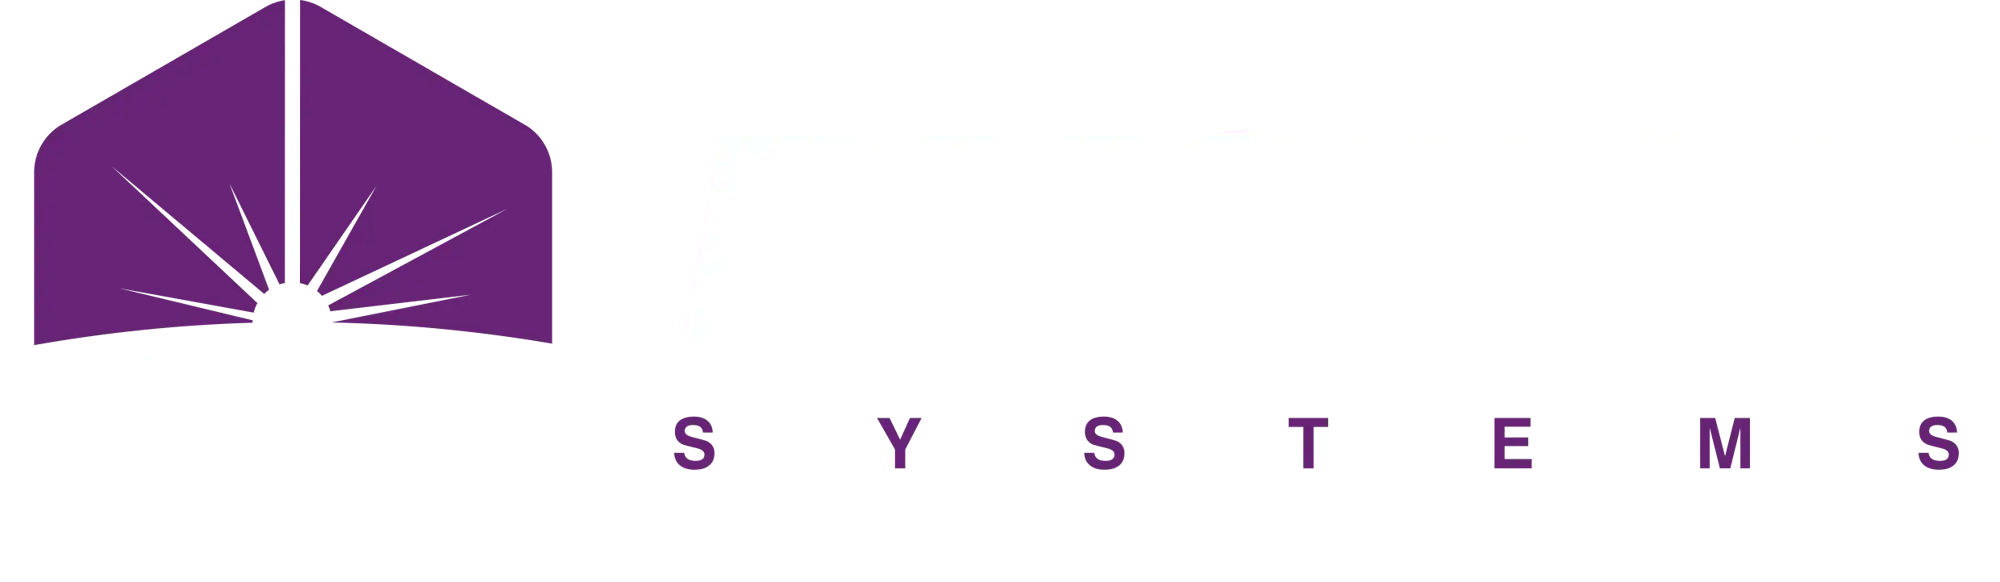 photon-systems-logo copy